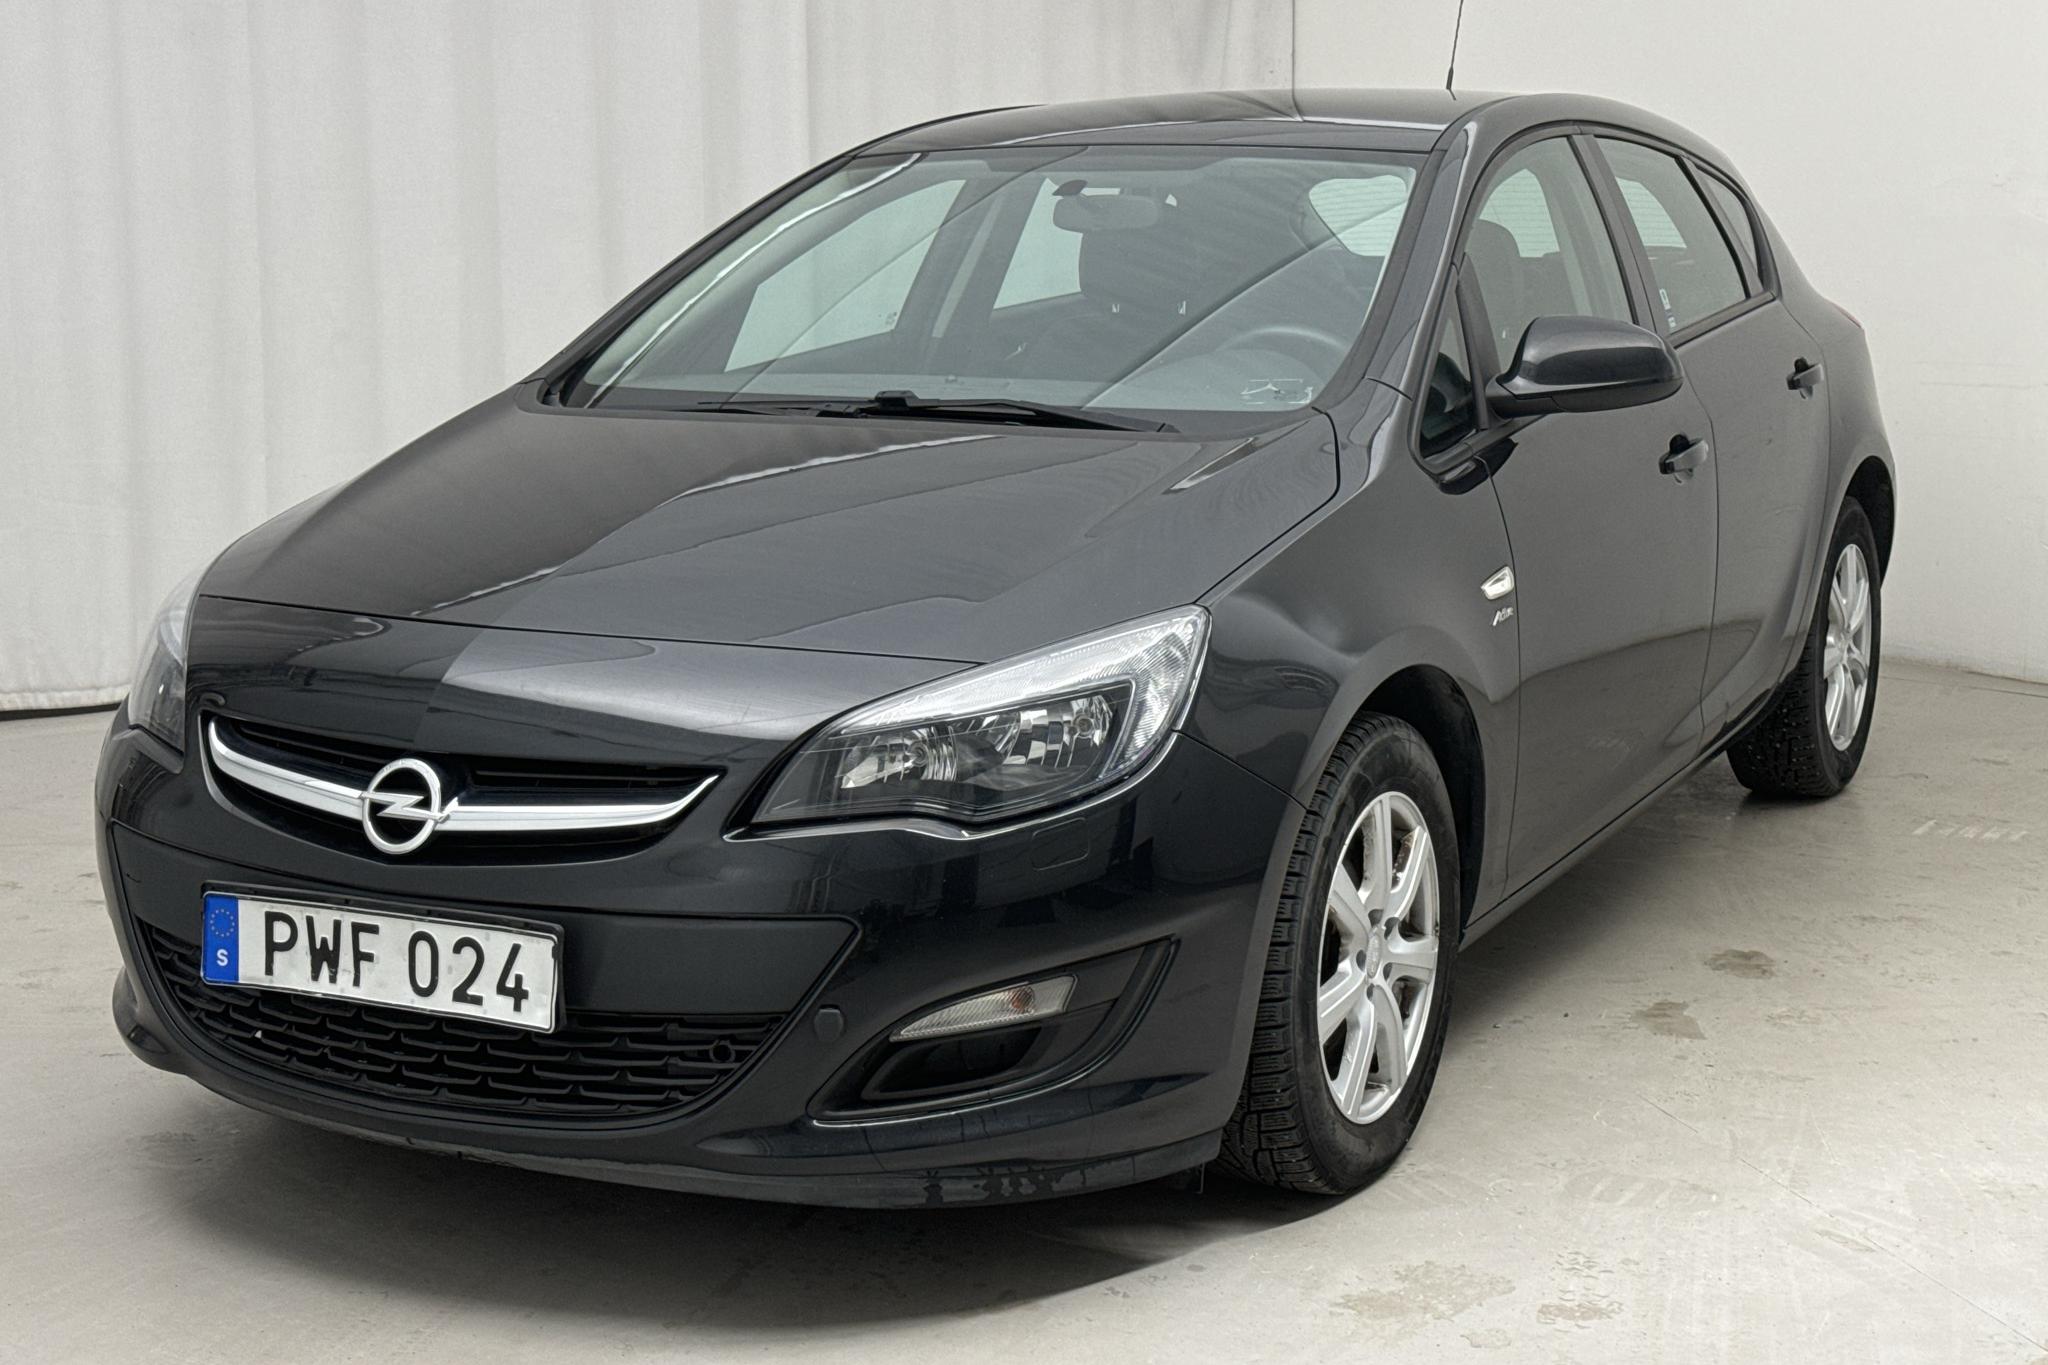 Opel Astra 1.4 Turbo ECOTEC 5dr (140hk) - 8 371 mil - Manuell - svart - 2014